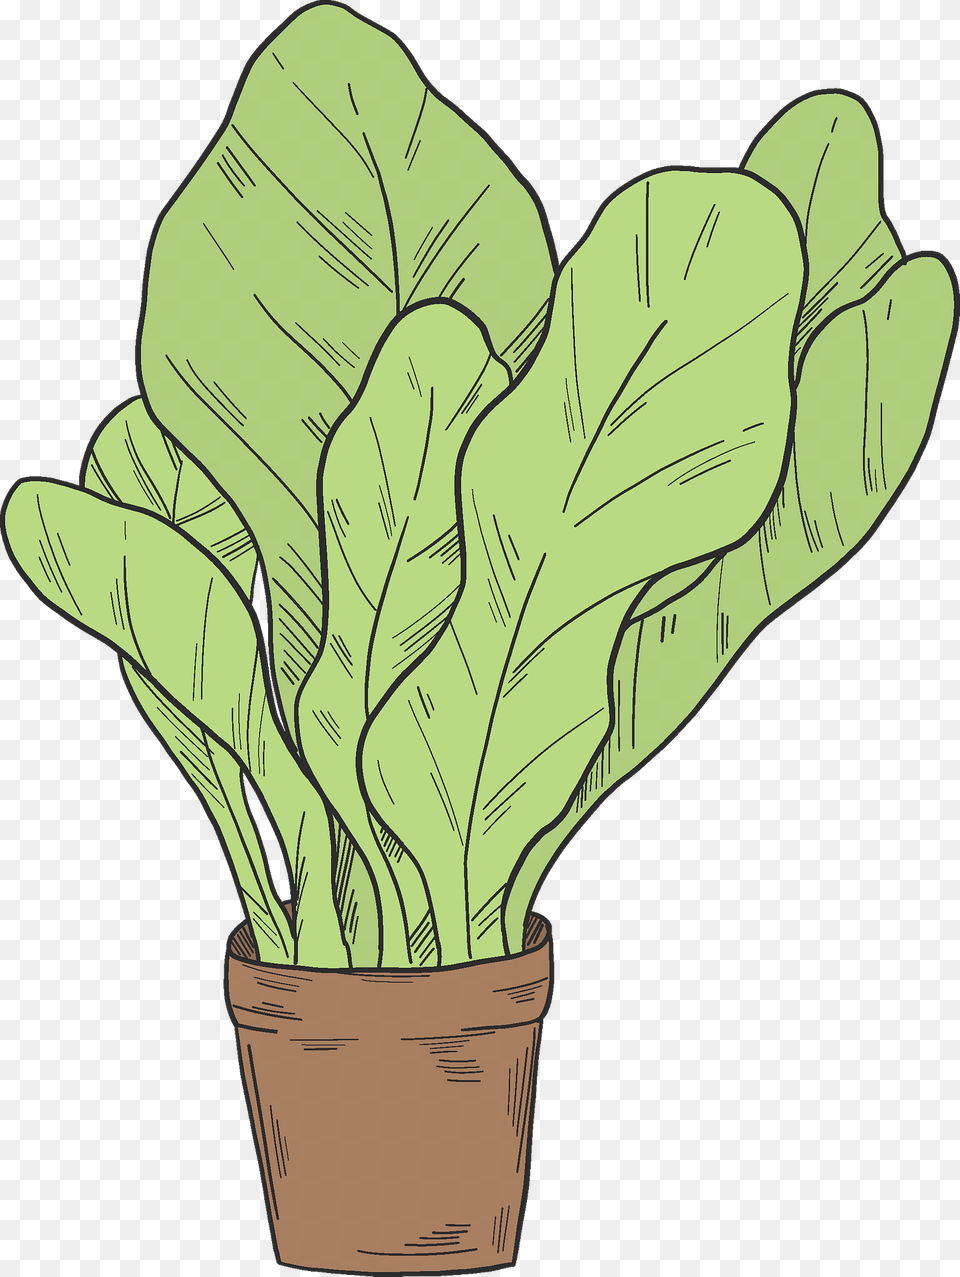 Salad In A Pot Clipart, Leaf, Plant, Food, Leafy Green Vegetable Png